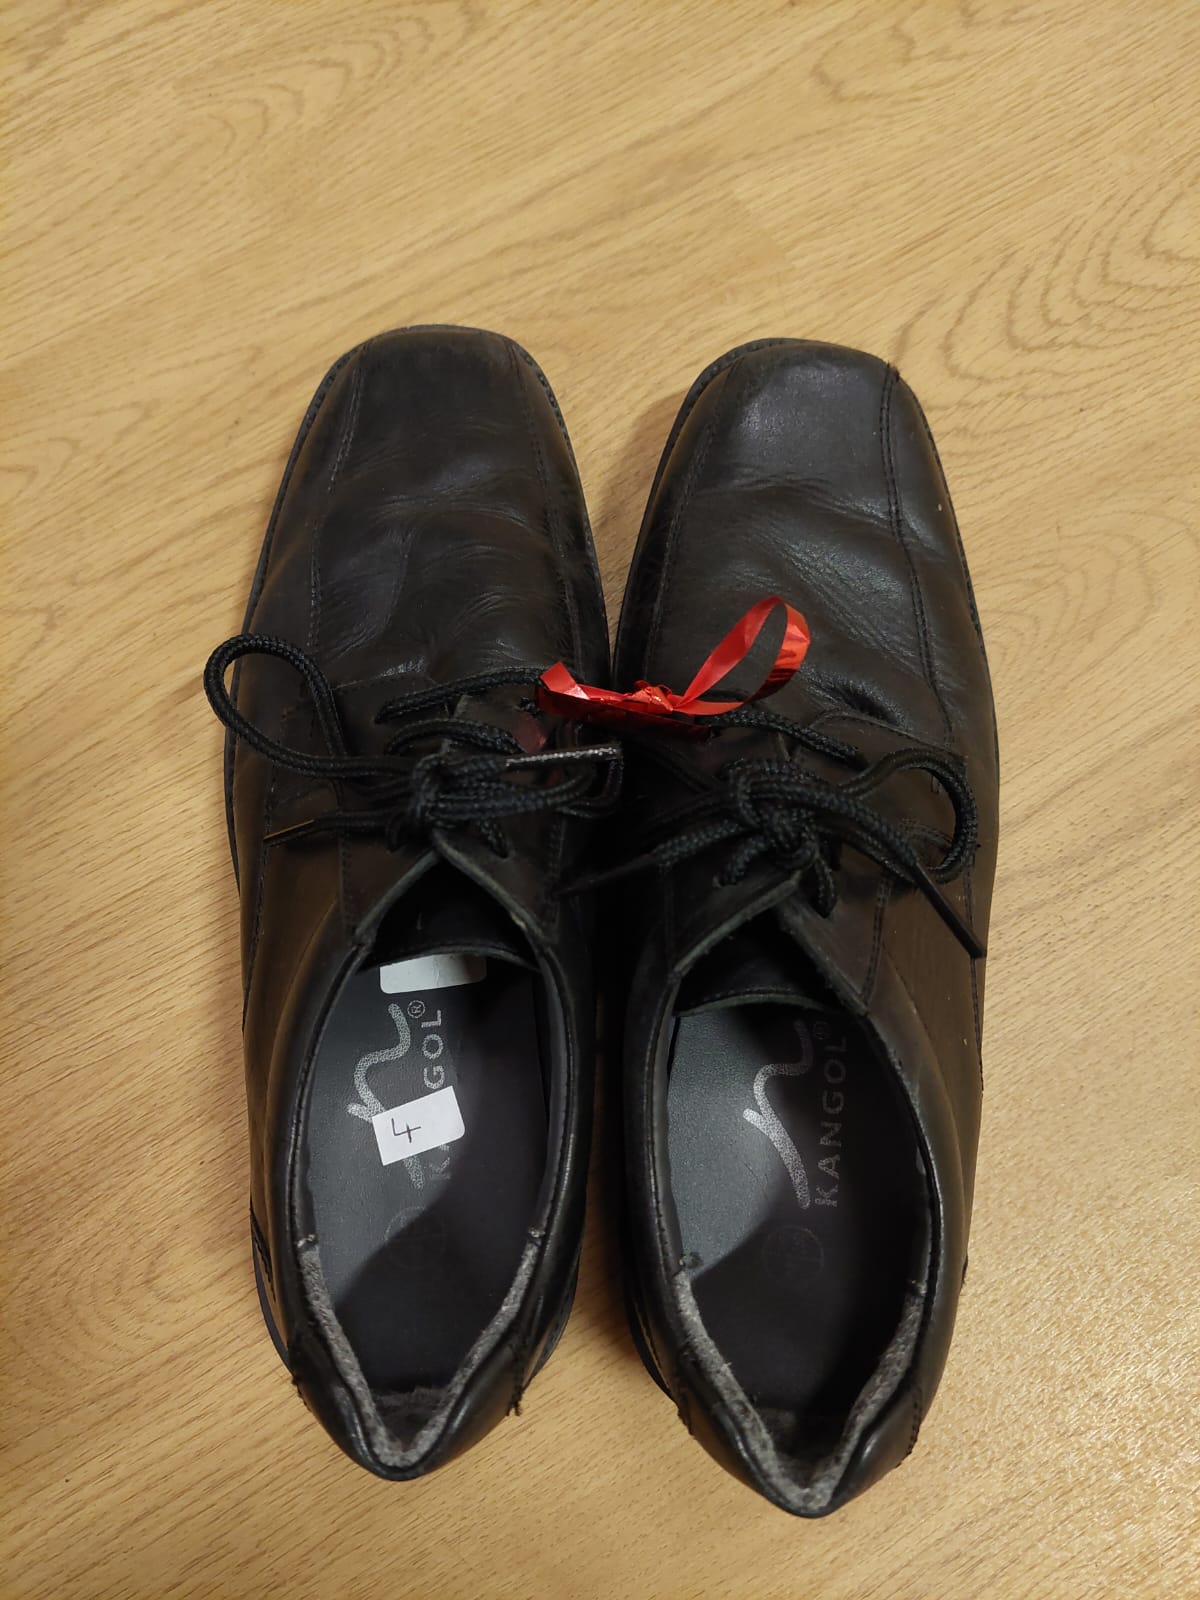 Boys shoes Size 4 (older)